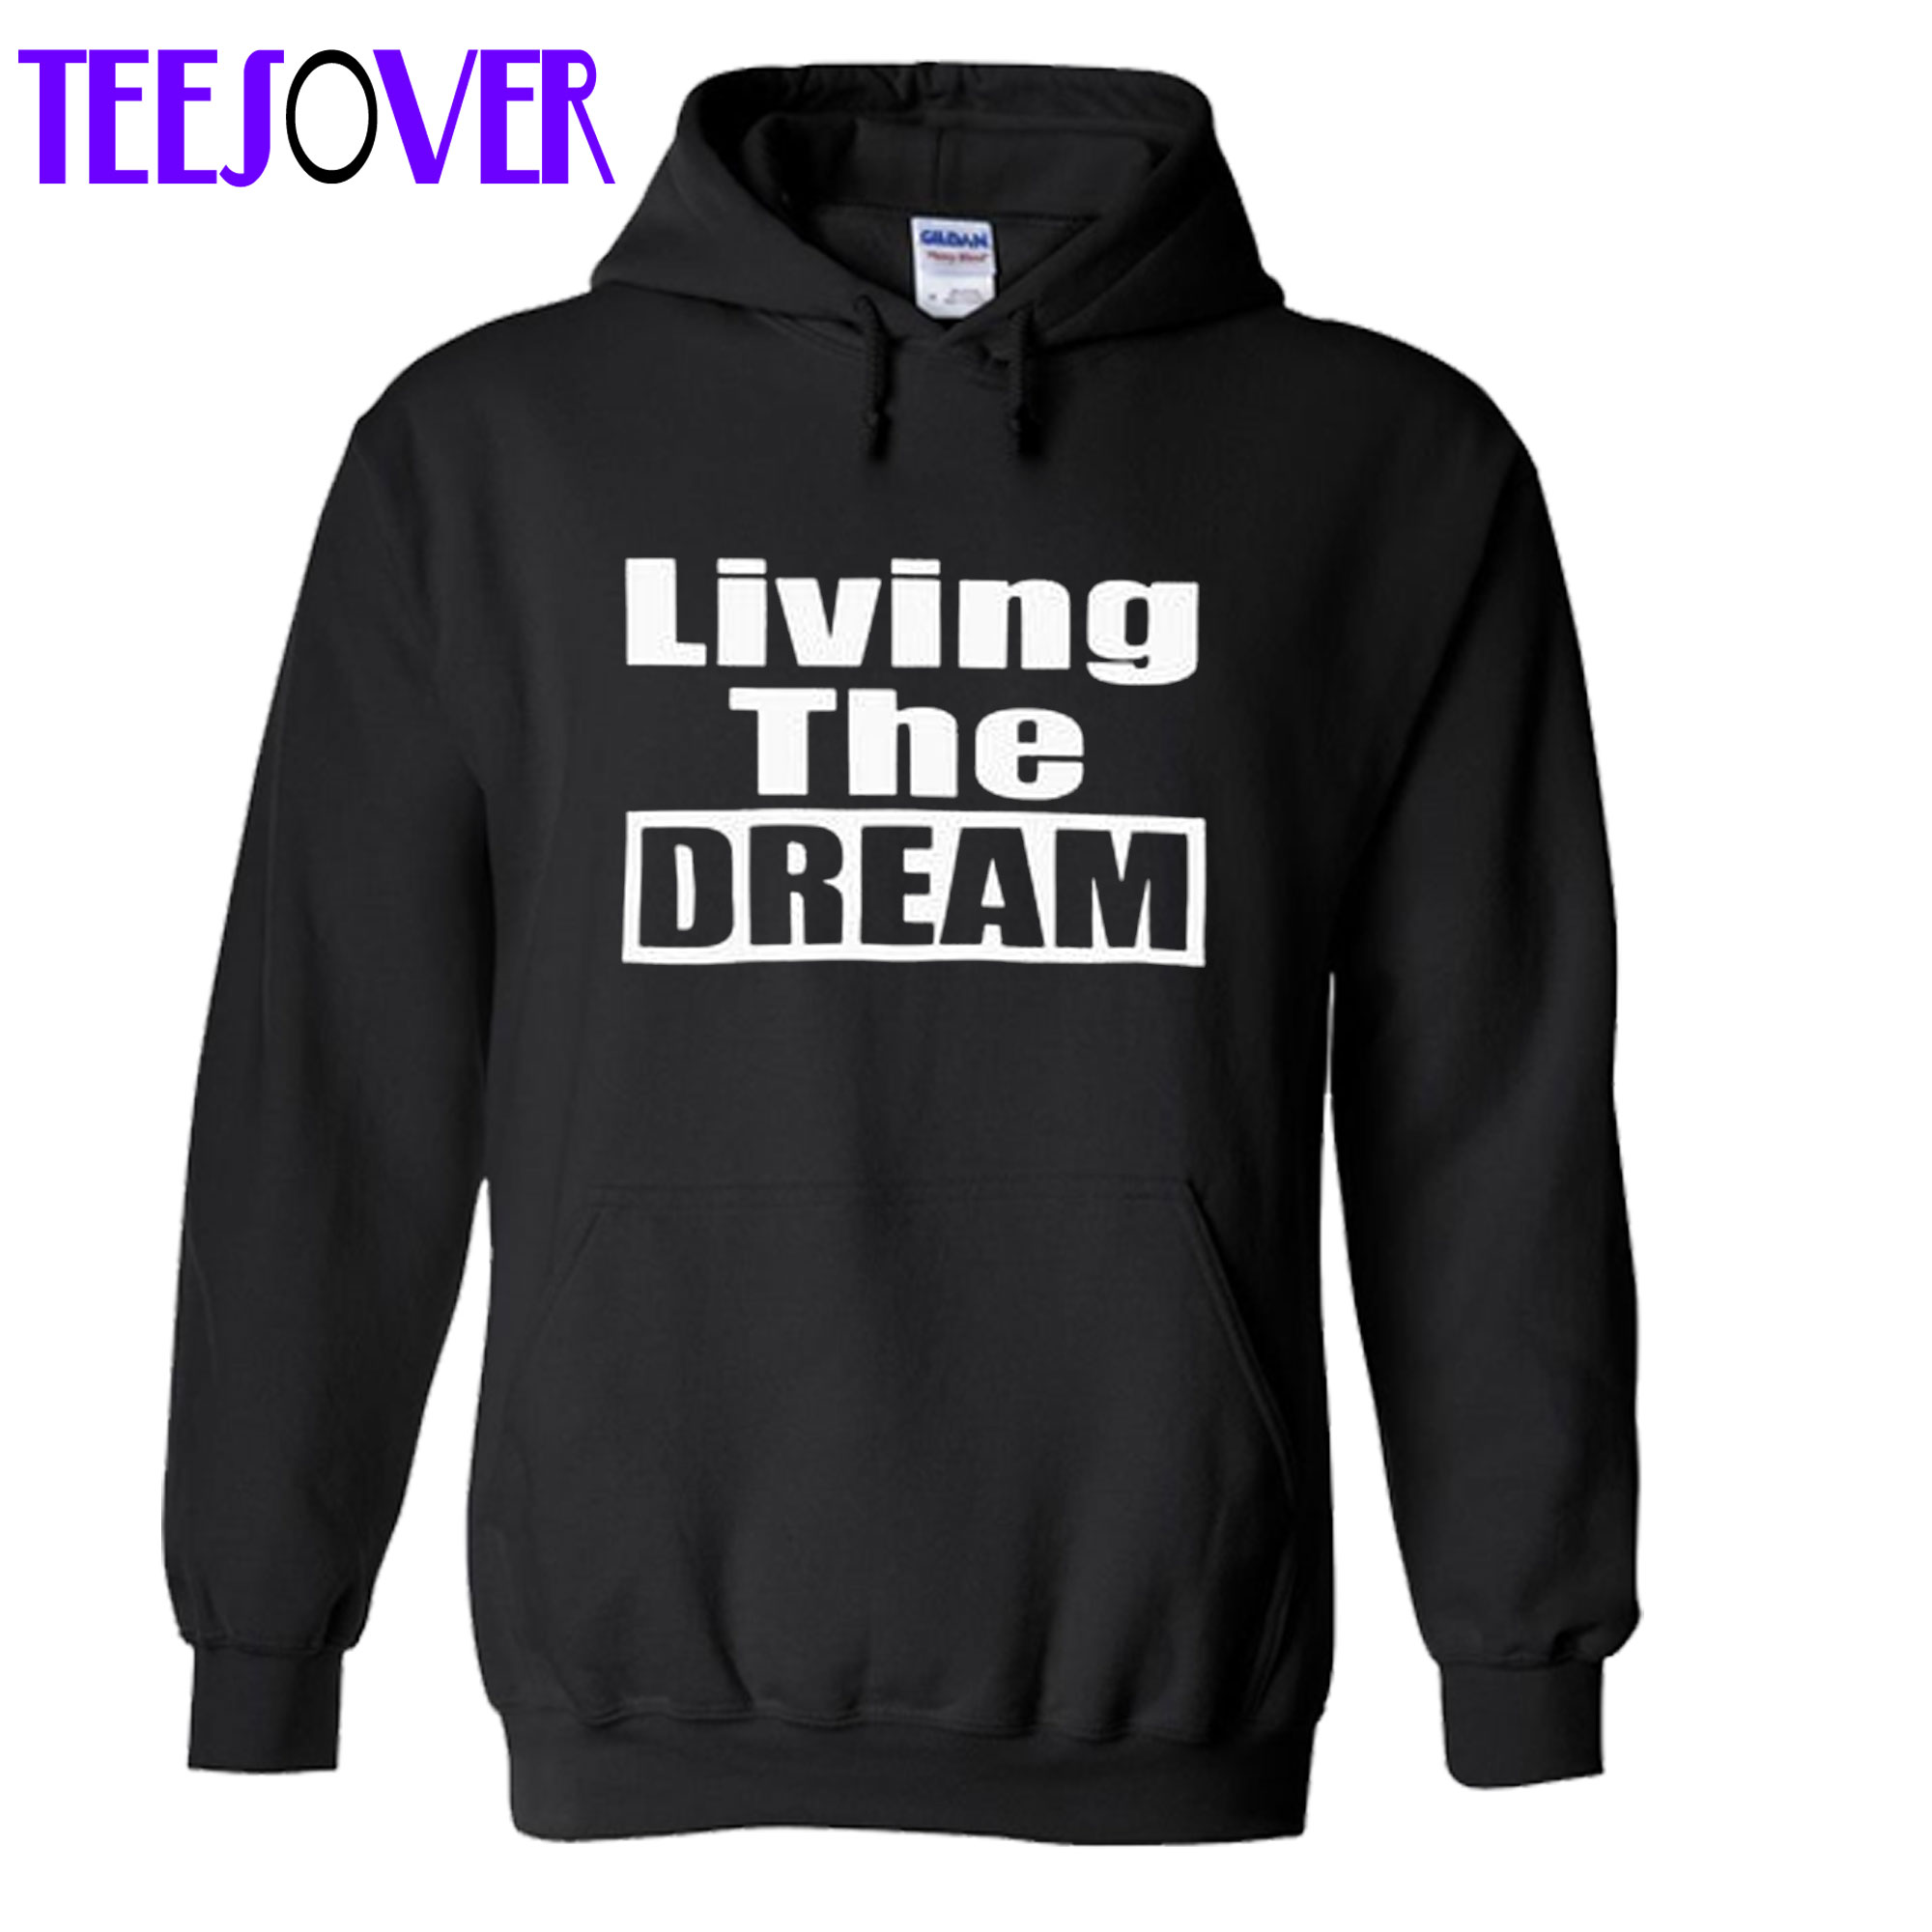 Living the dream hoodie